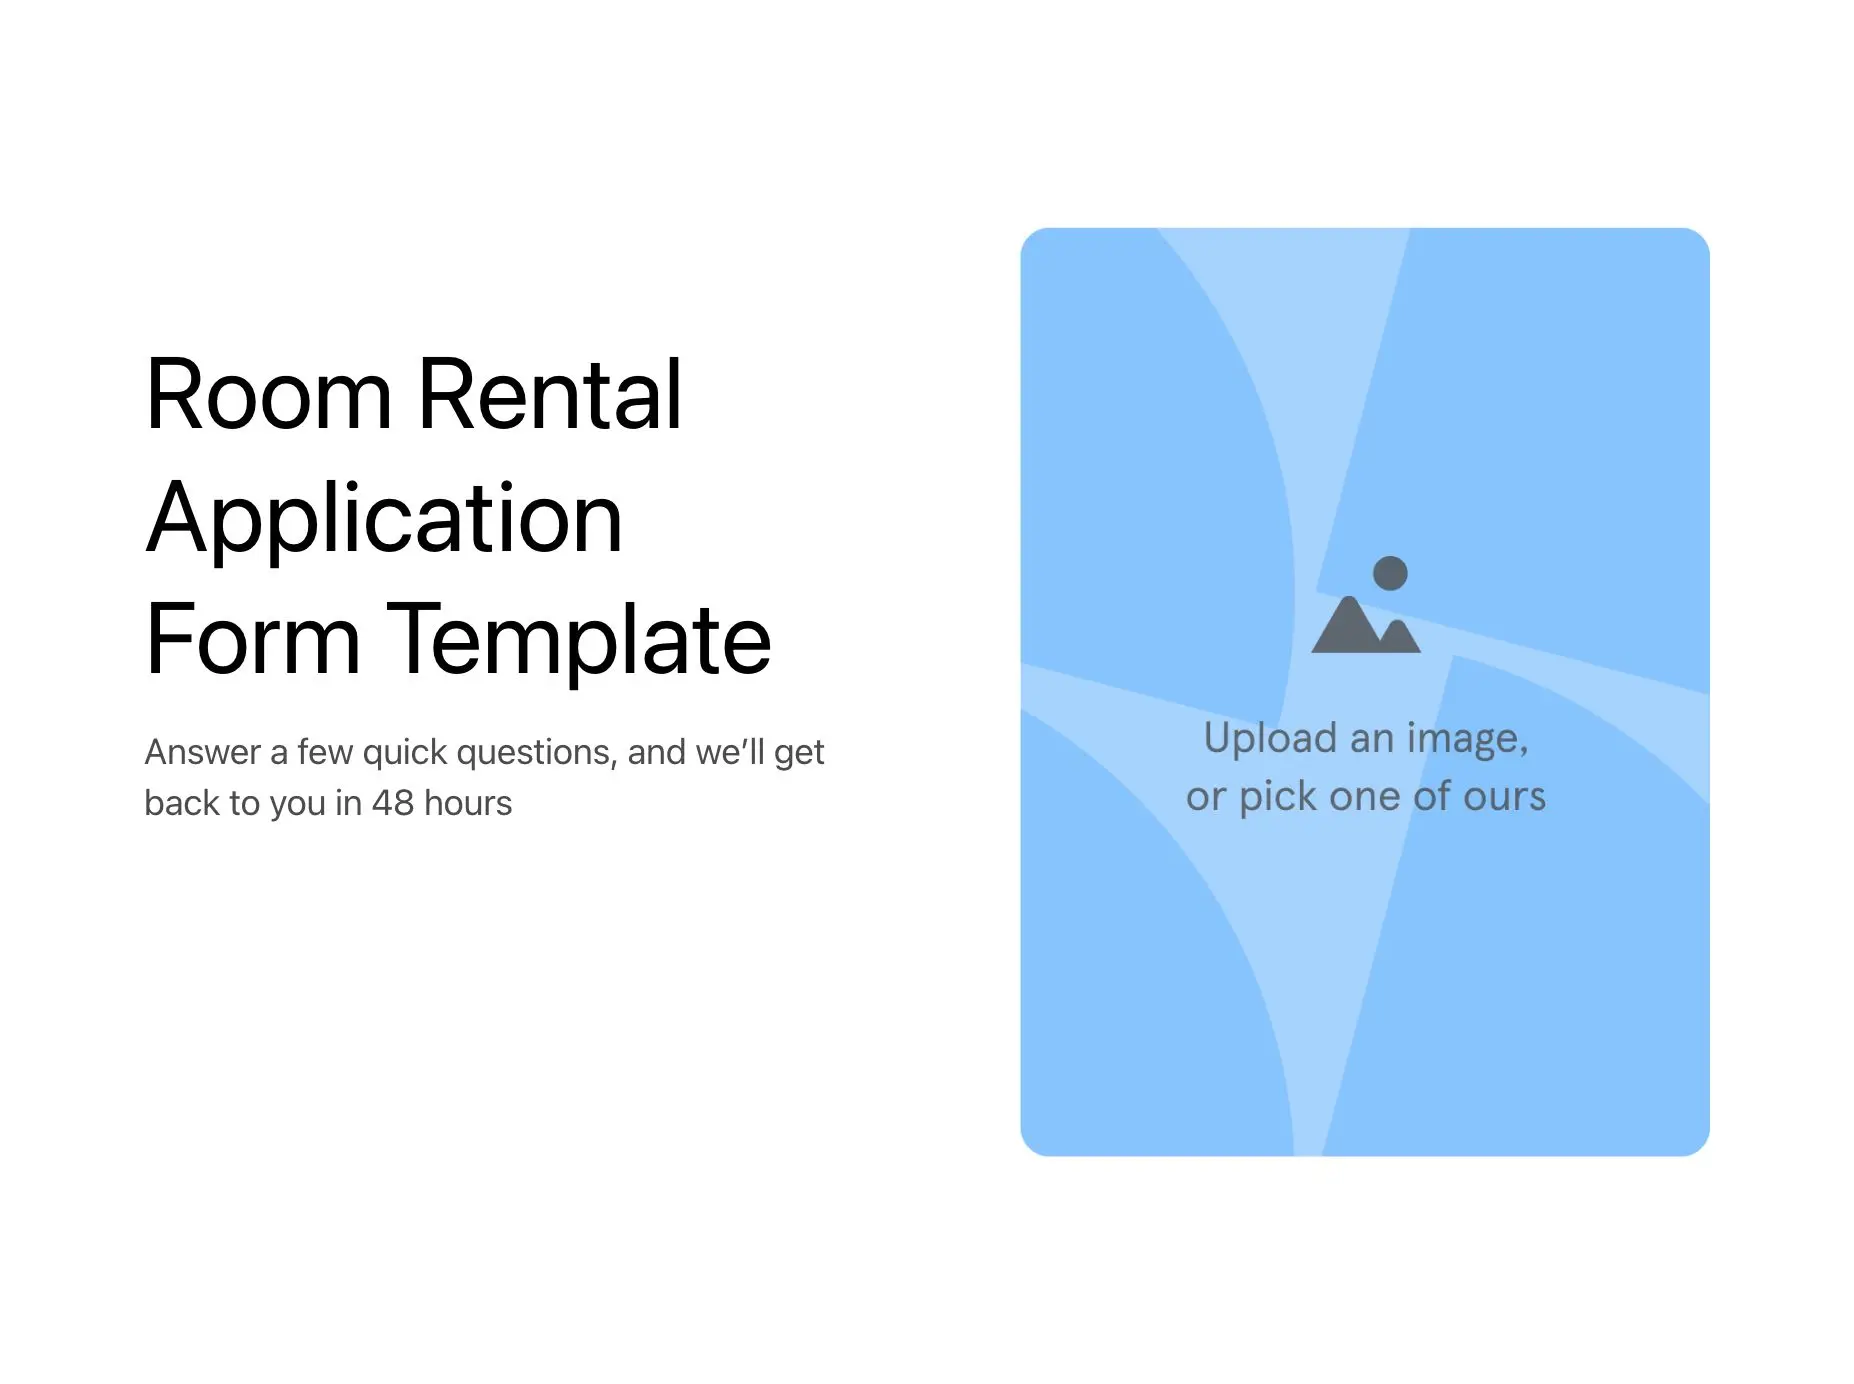 Room Rental Application Form Template Hero